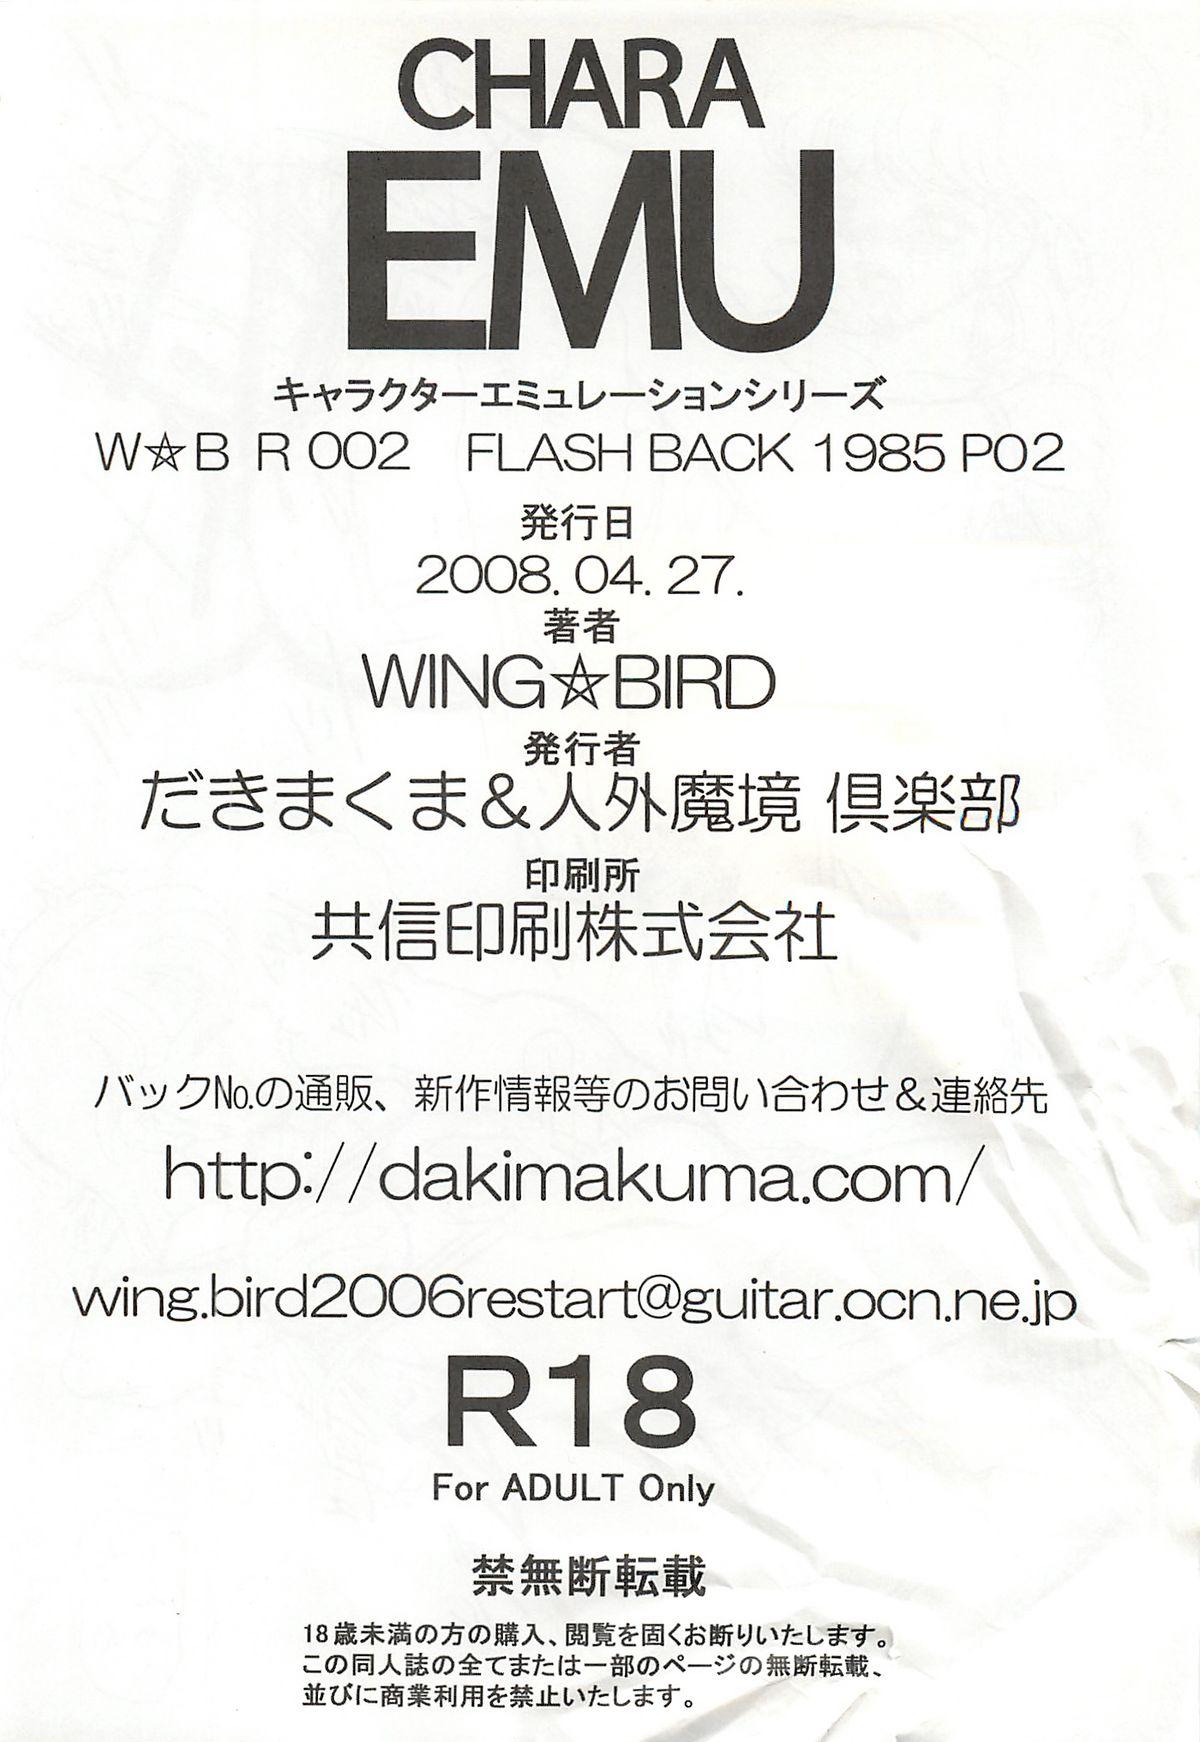 CHARA EMU W☆BR002 FLASH BACK1985 P02 36